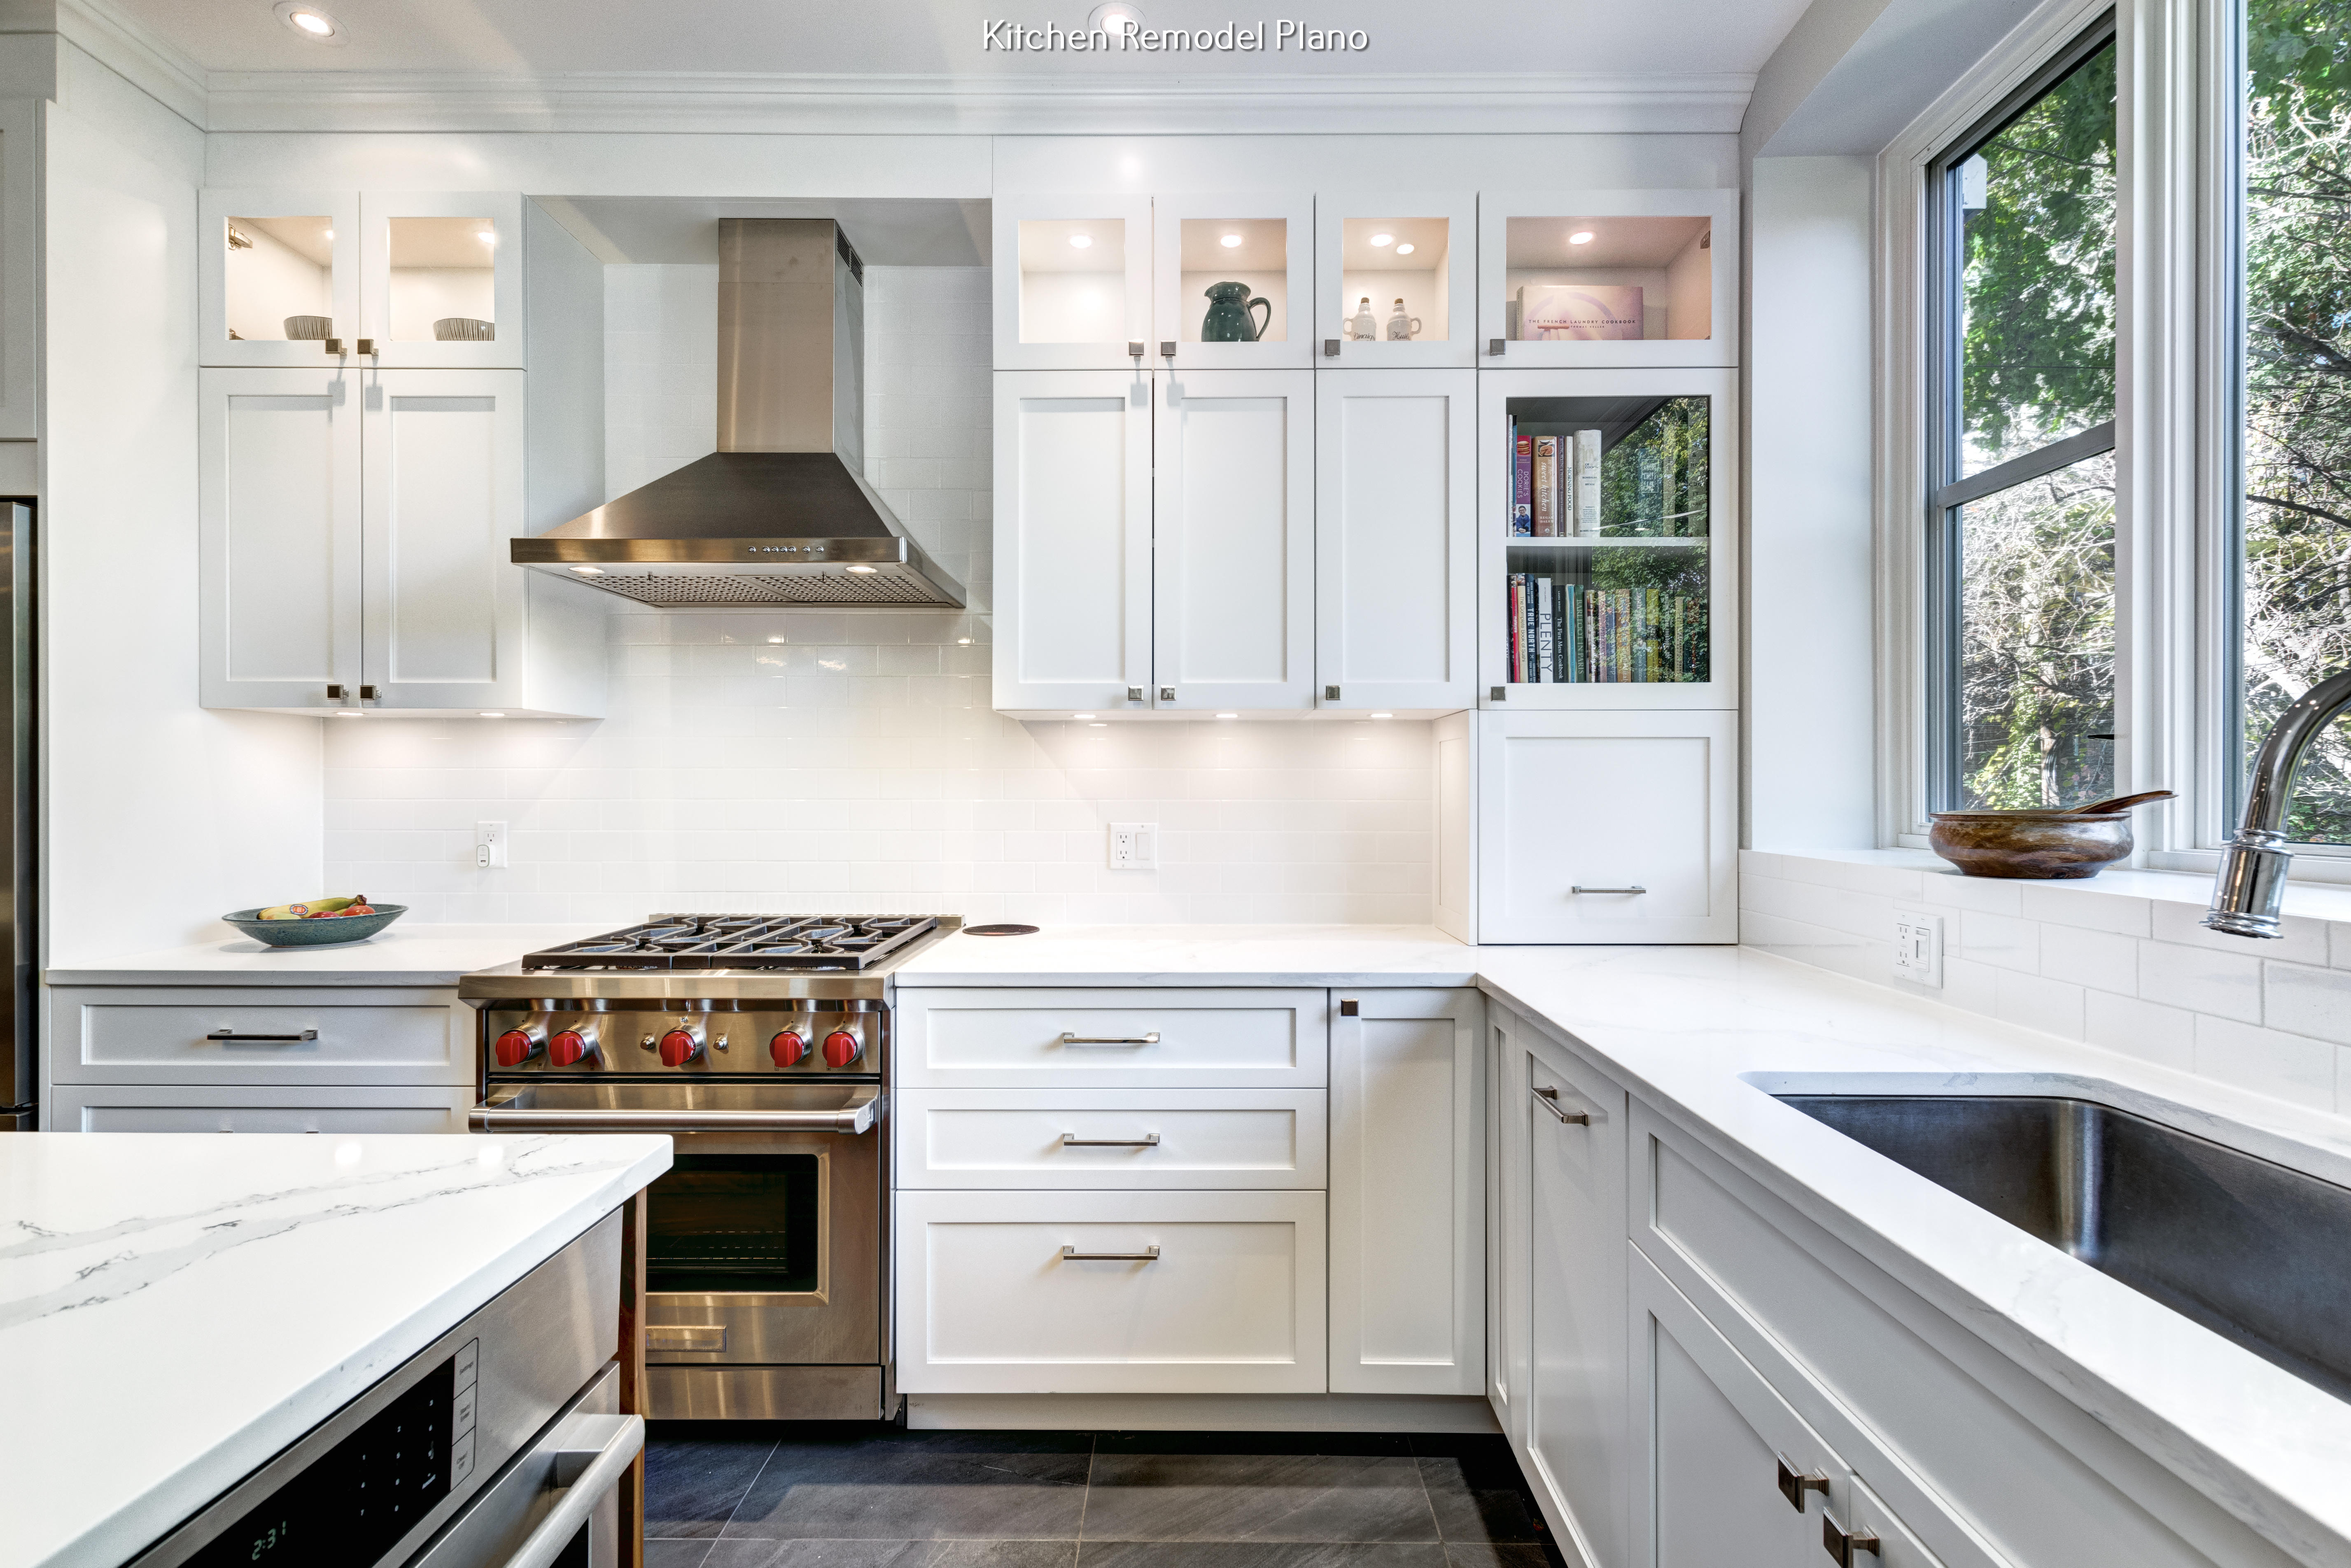 Nielsen’s Remodeling Shares the Importance of Full Kitchen Remodeling